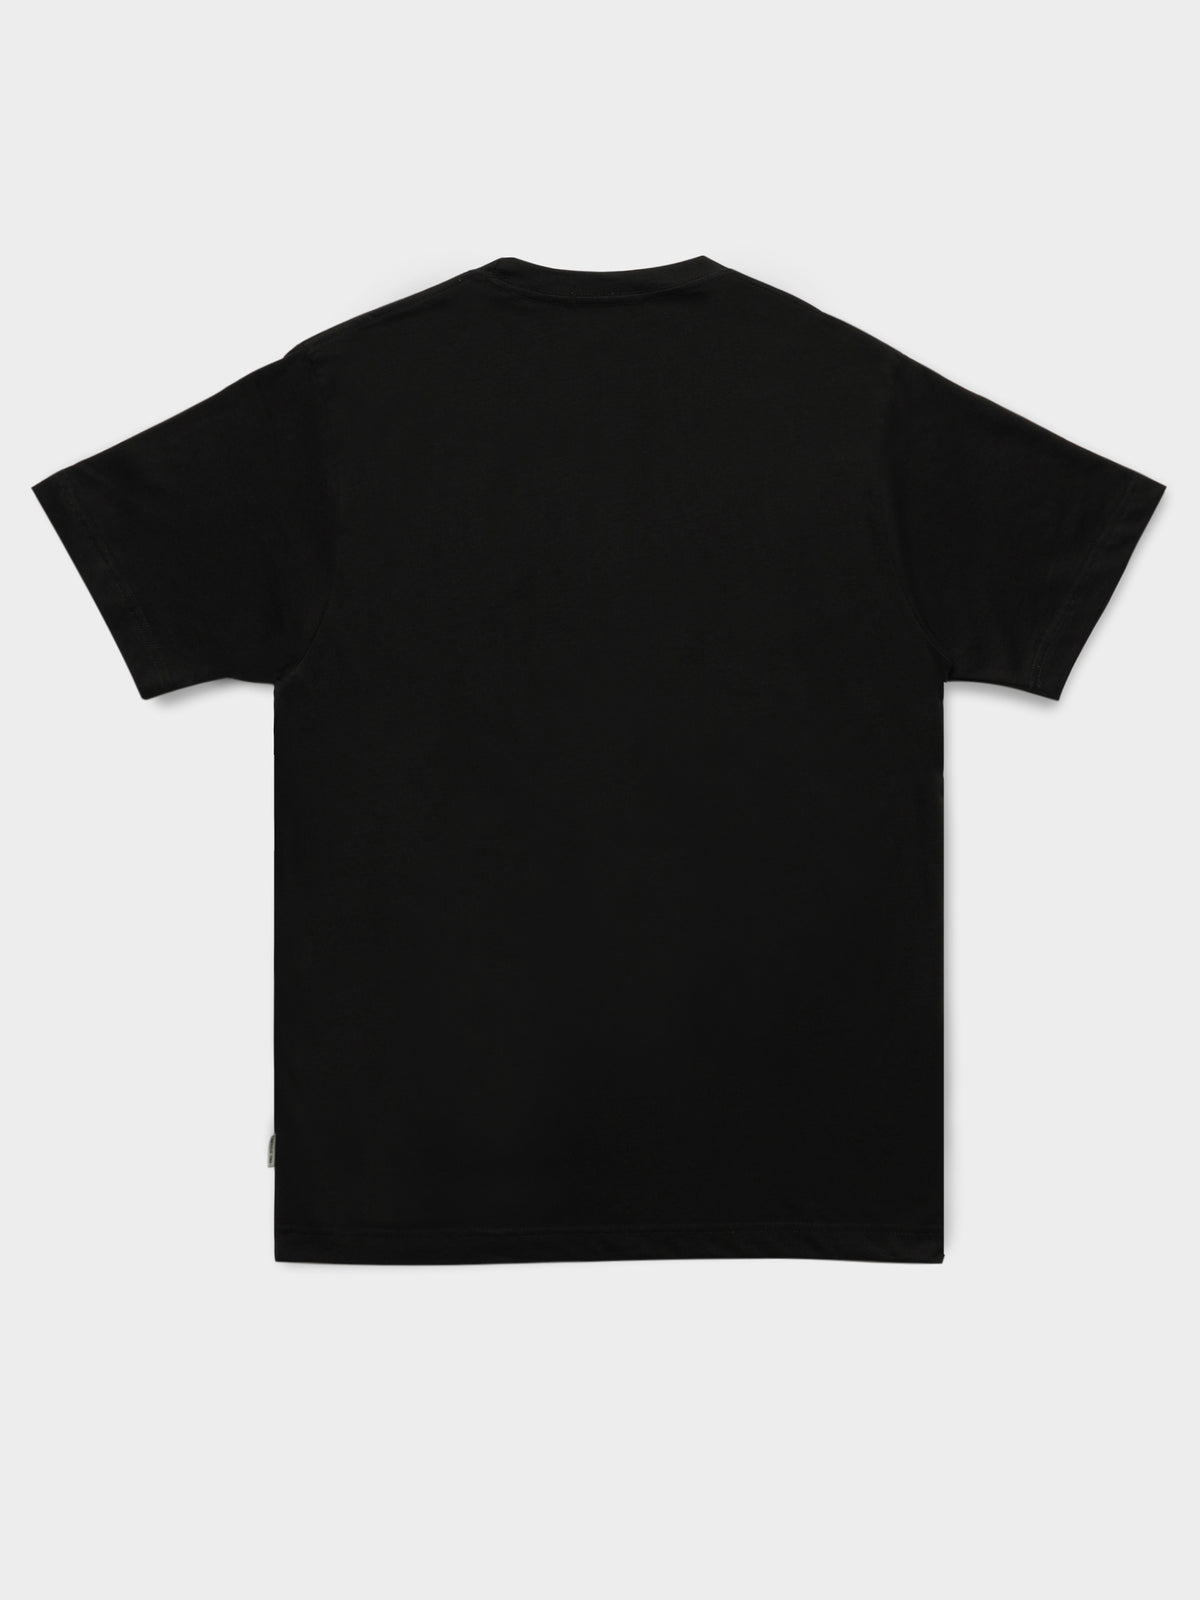 Classic T-Shirt in Black